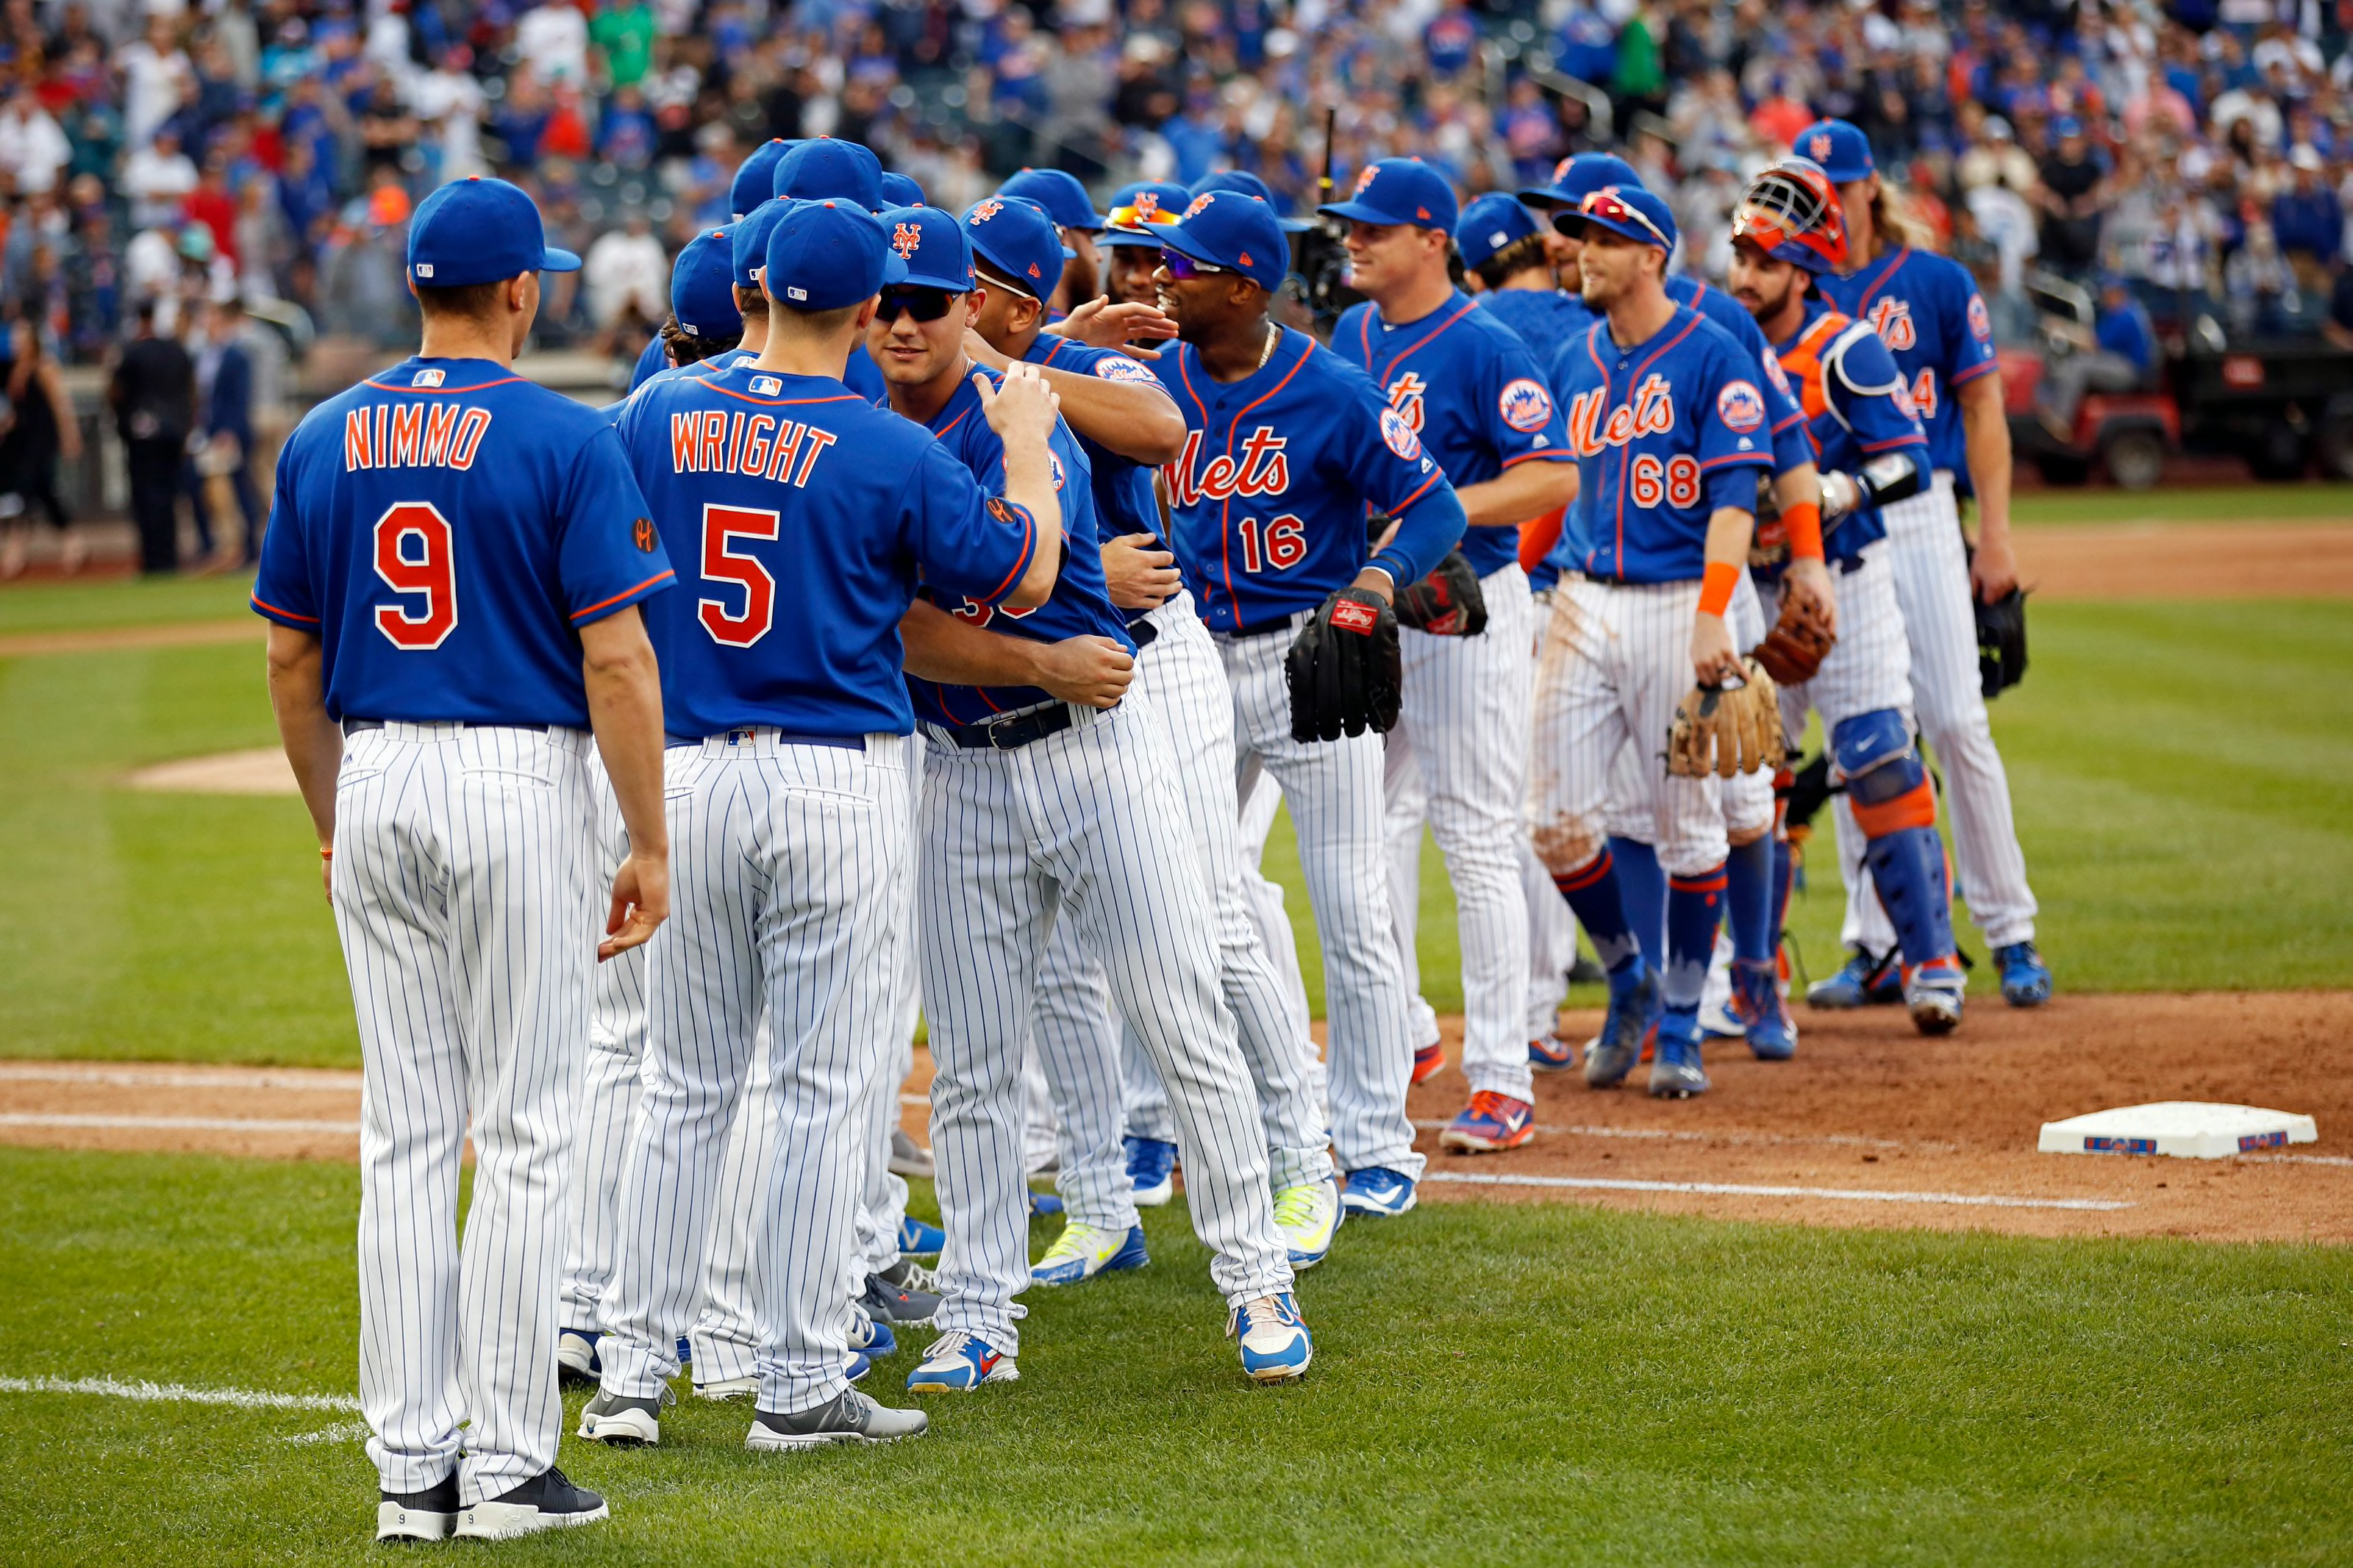 New York Mets on X: Let's get it back. Go #TeamUSA! Retweet to